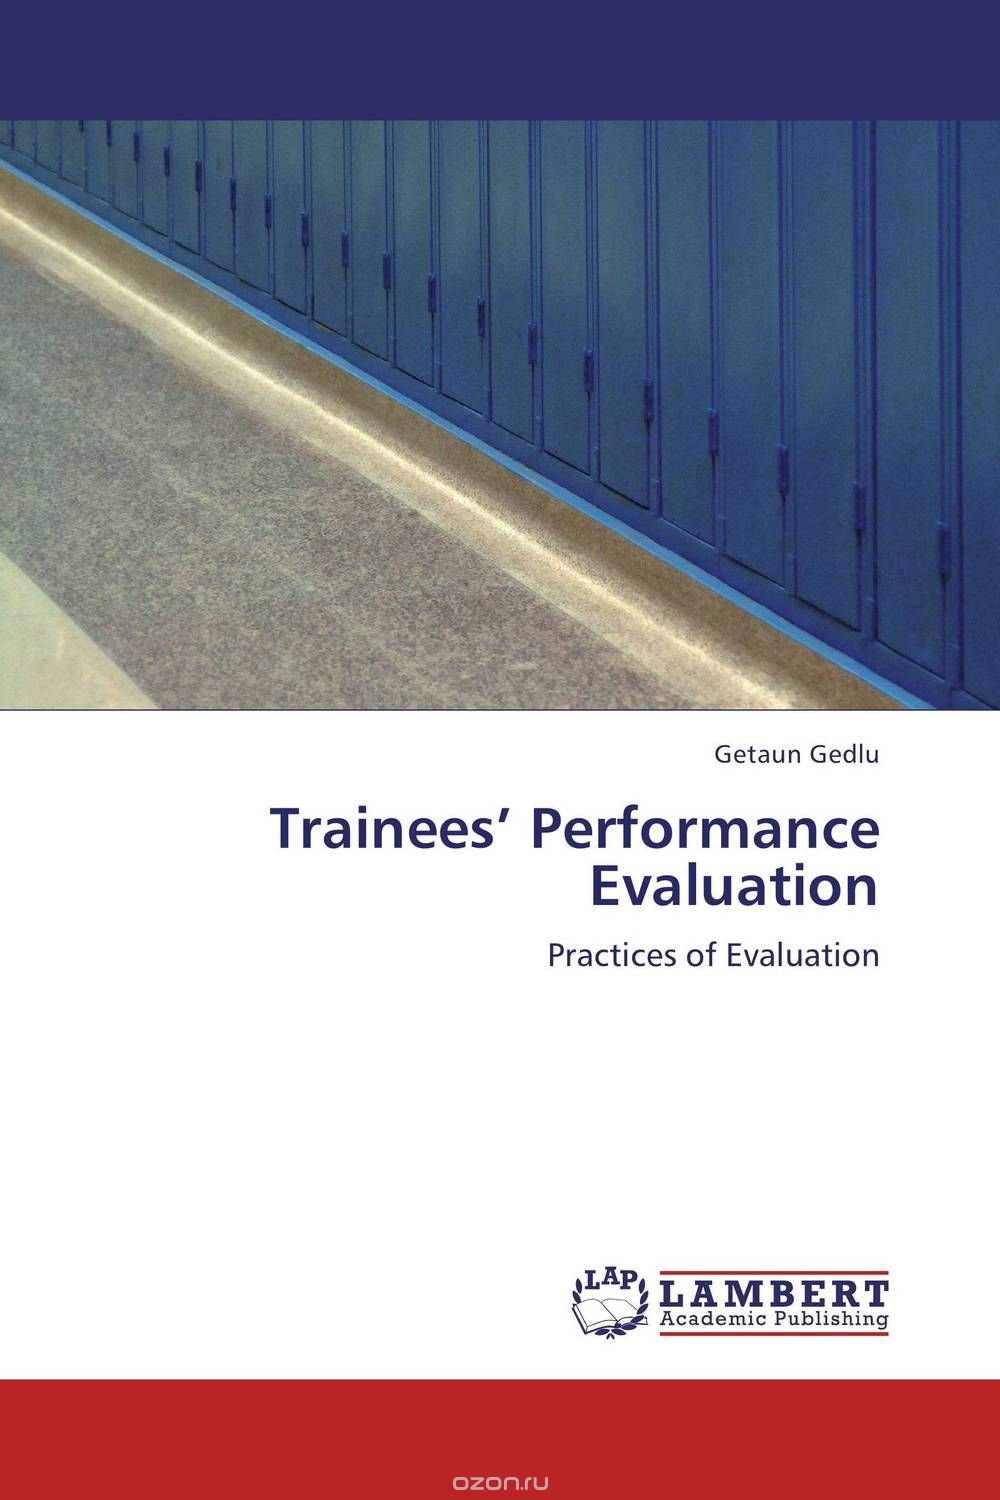 Скачать книгу "Trainees’ Performance Evaluation"